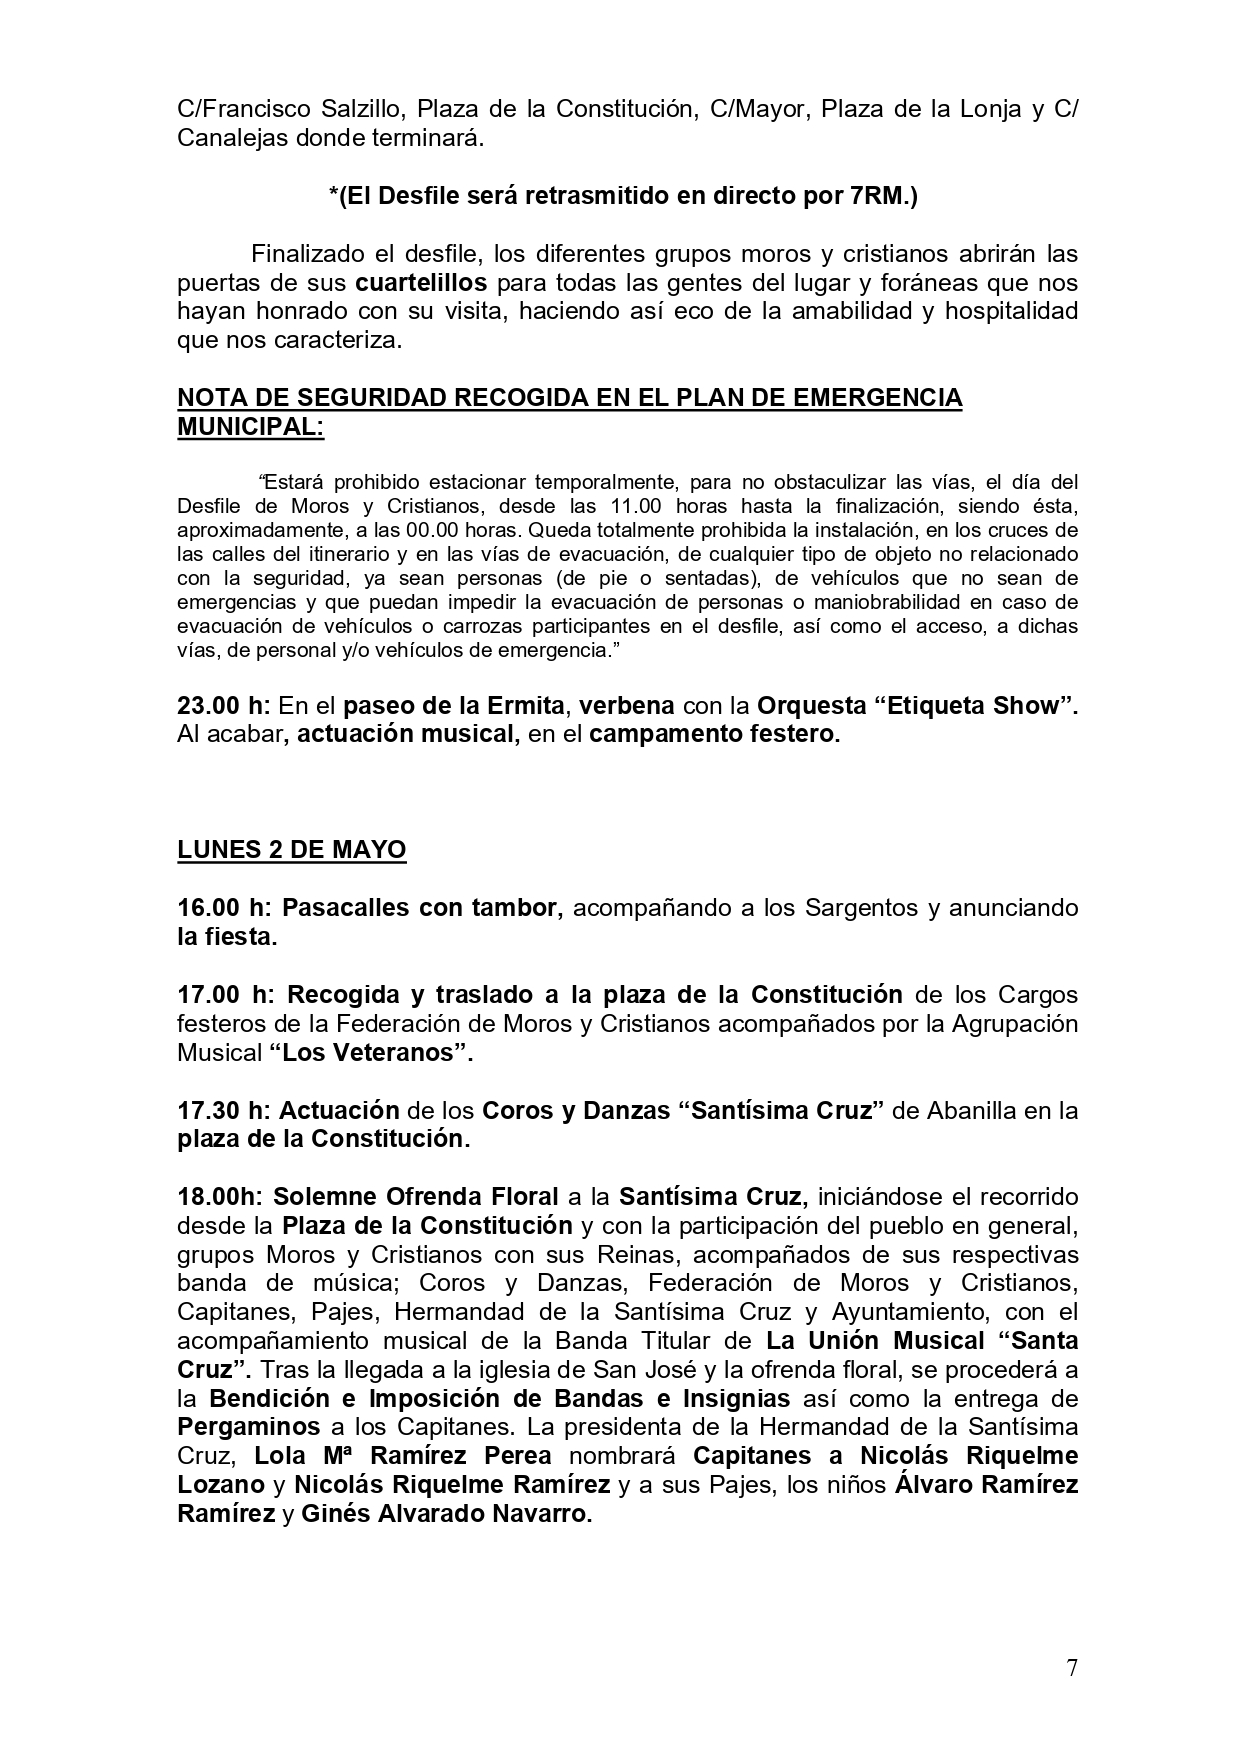 PROGRAMACION-FIESTAS-ABANILLA-2022-ESPANOL_page-0007.jpg